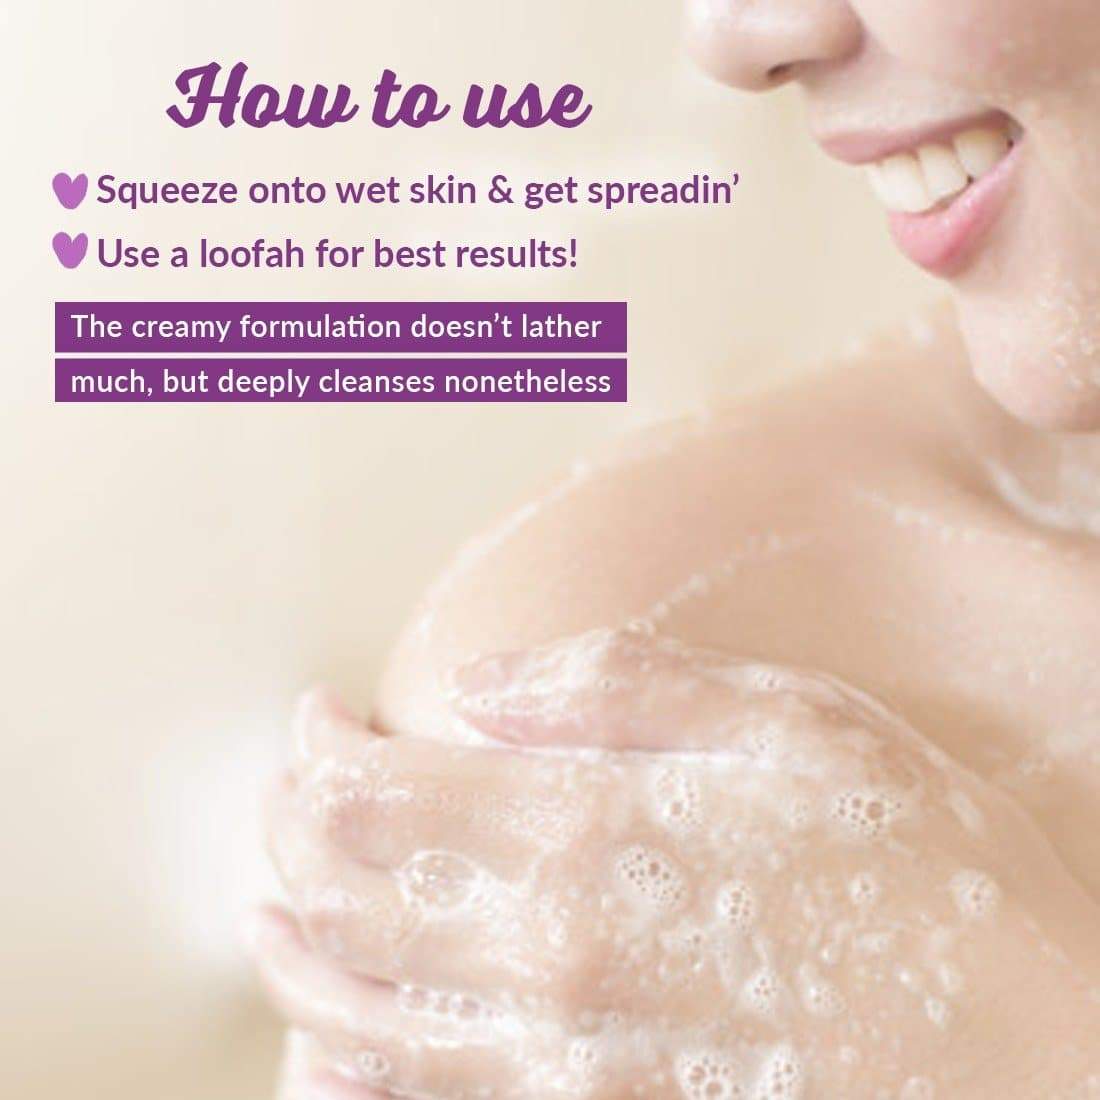 Vanilla Vibes Shower Cream by Plum BodyLovin'